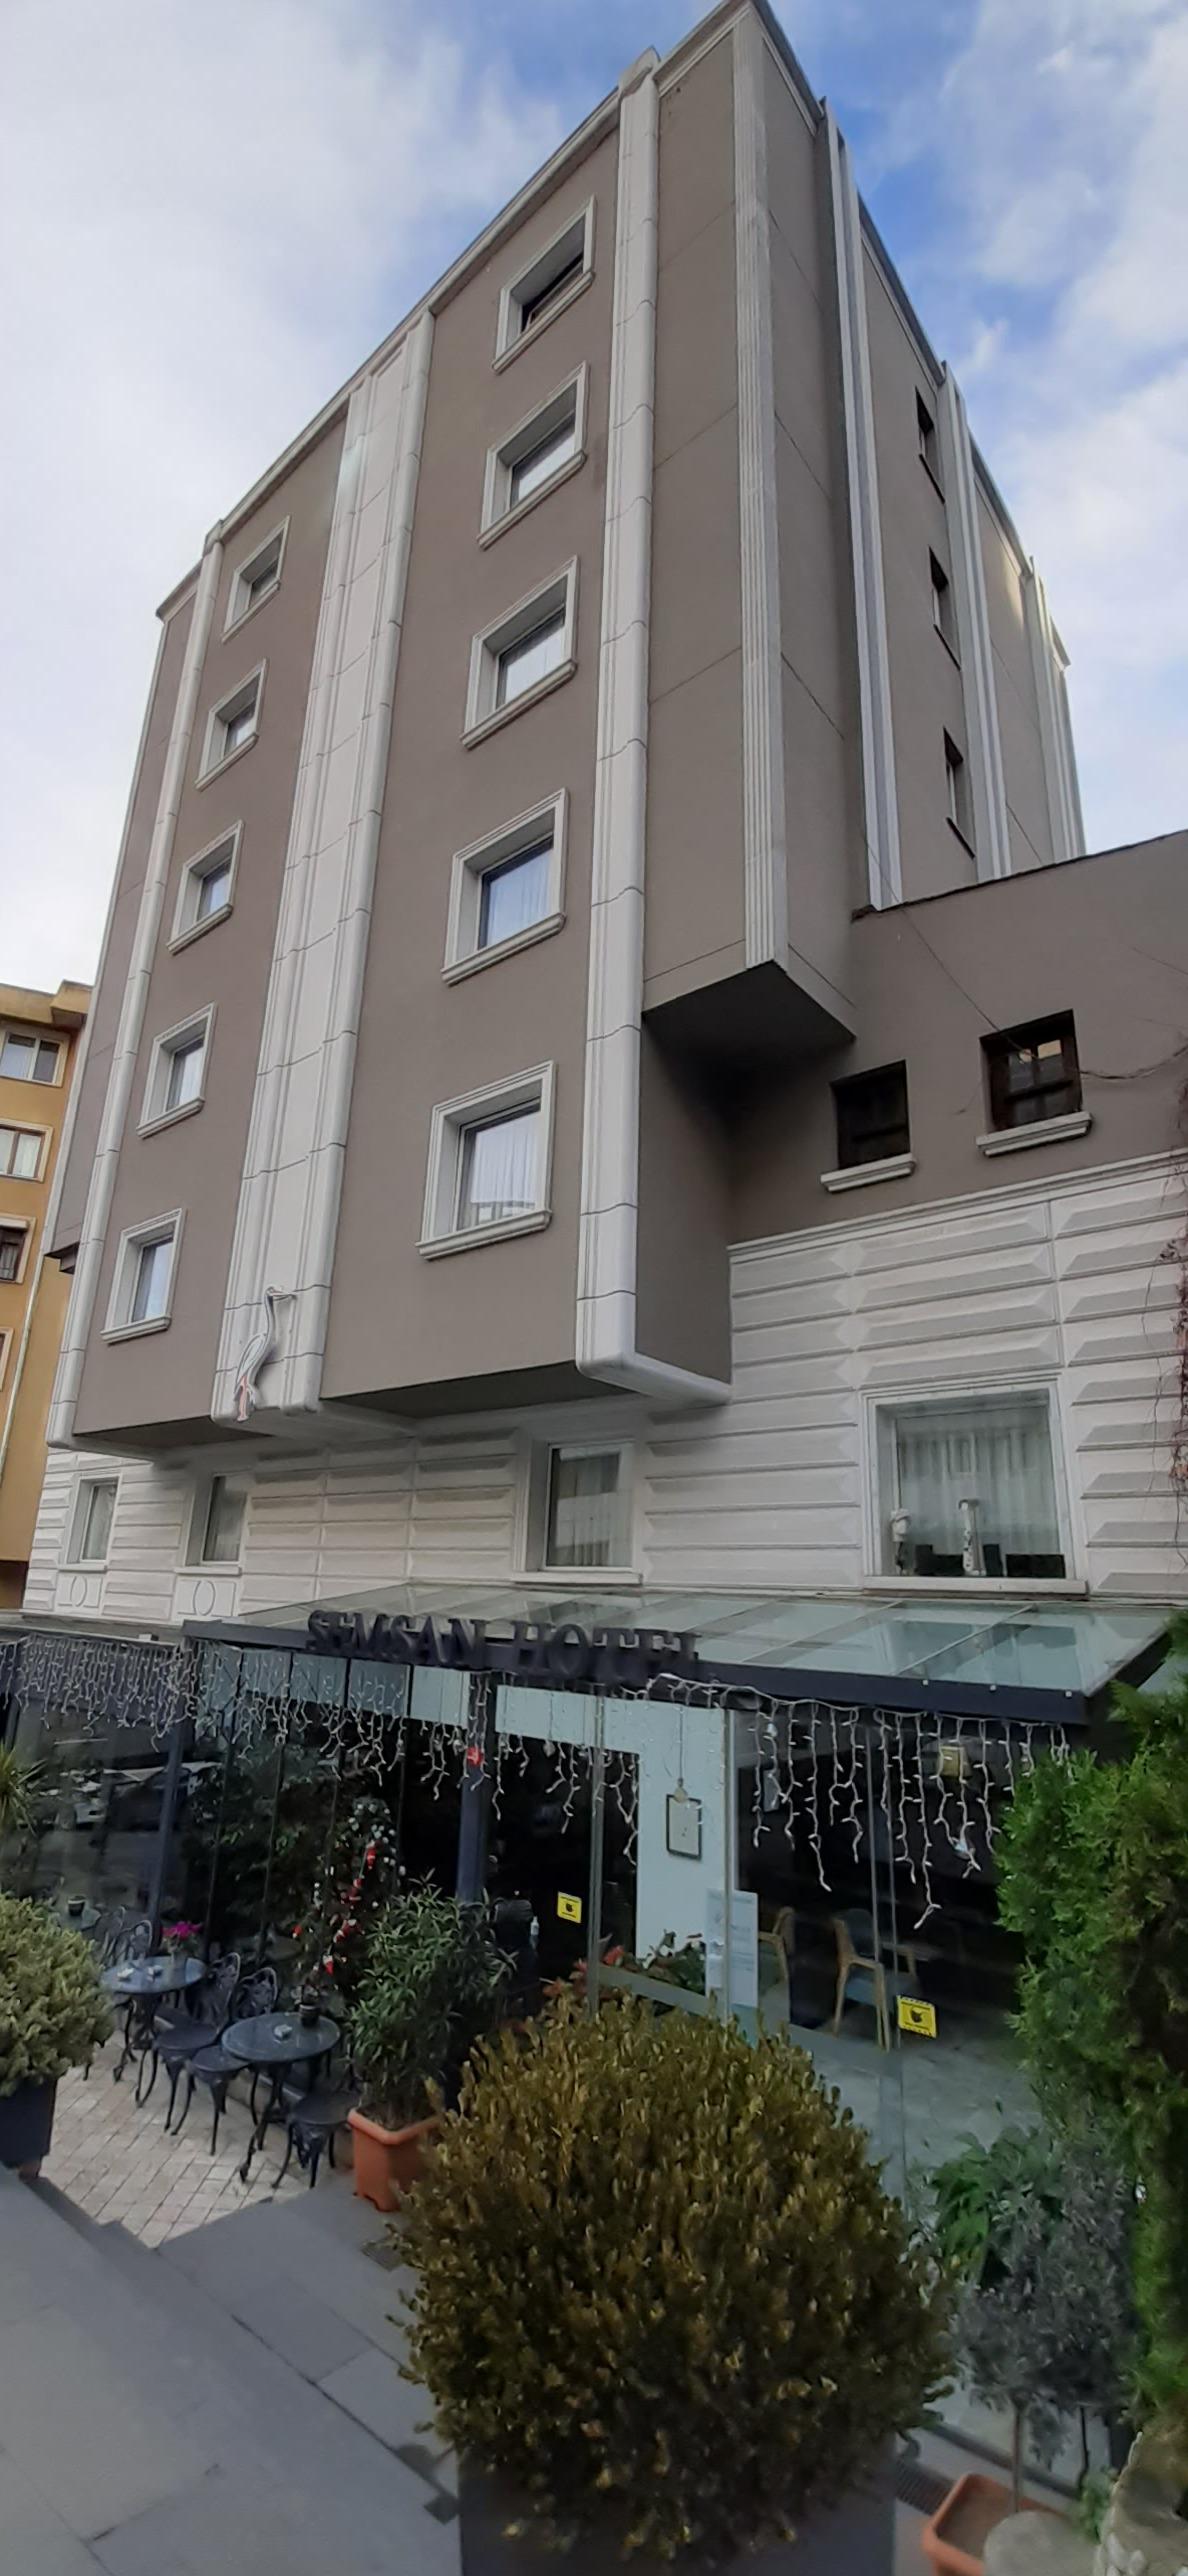 Semsan Hotel Стамбул Экстерьер фото